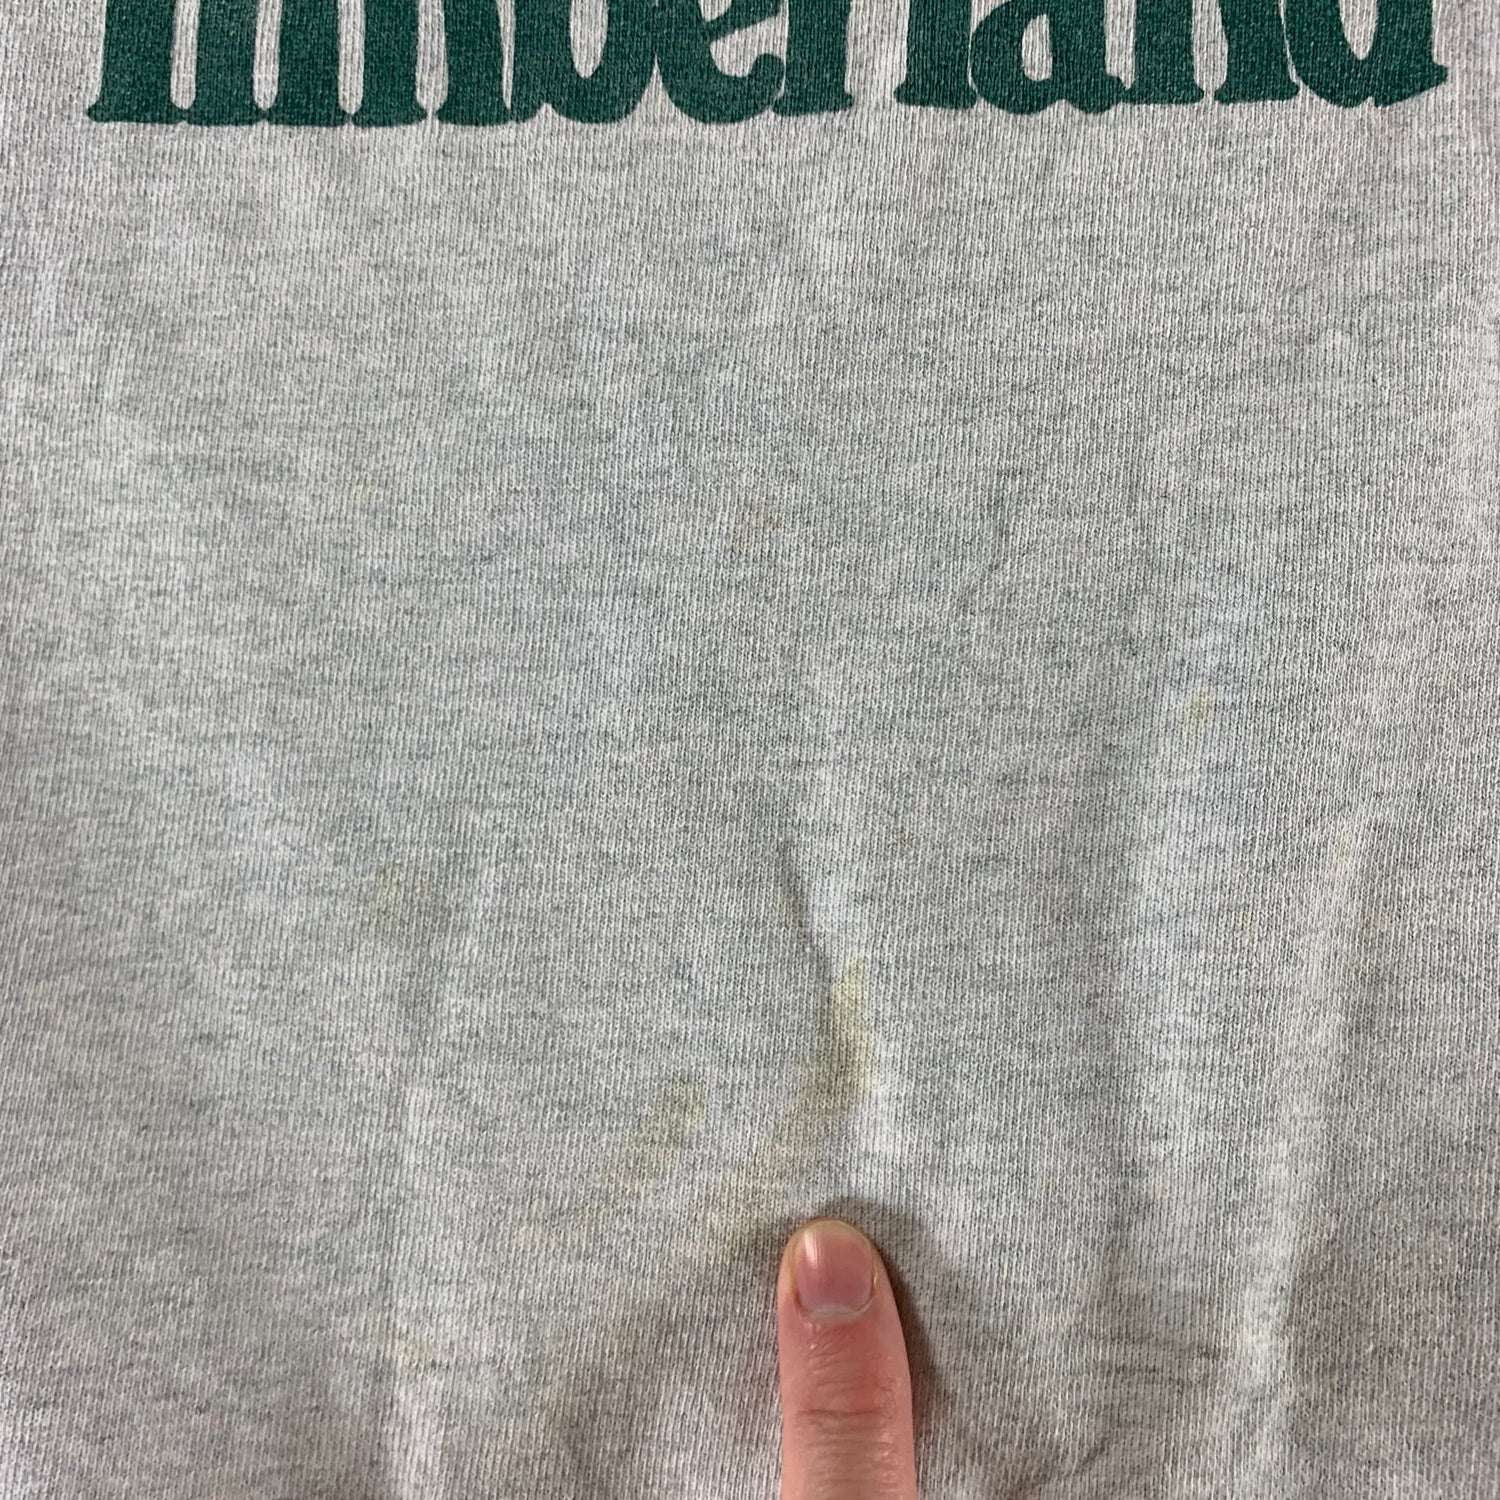 Vintage 1990s Timberland Sweatshirt size XL